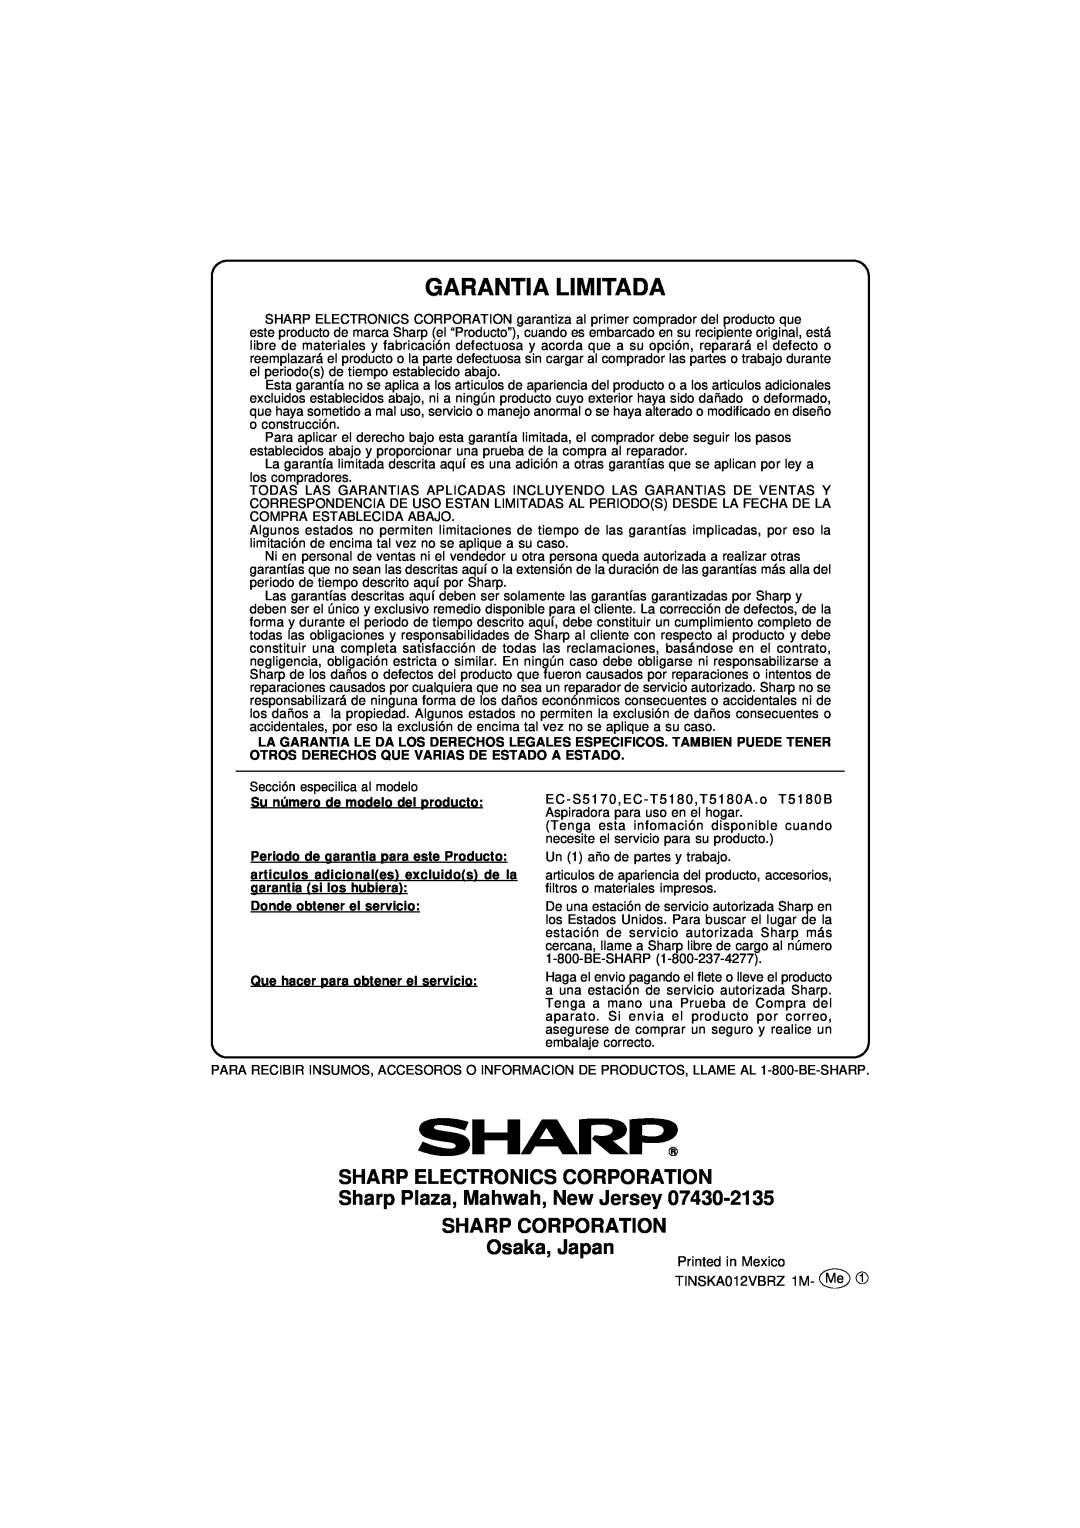 Sharp EC-T5180 Garantia Limitada, Sharp Electronics Corporation, Sharp Plaza, Mahwah, New Jersey SHARP CORPORATION 